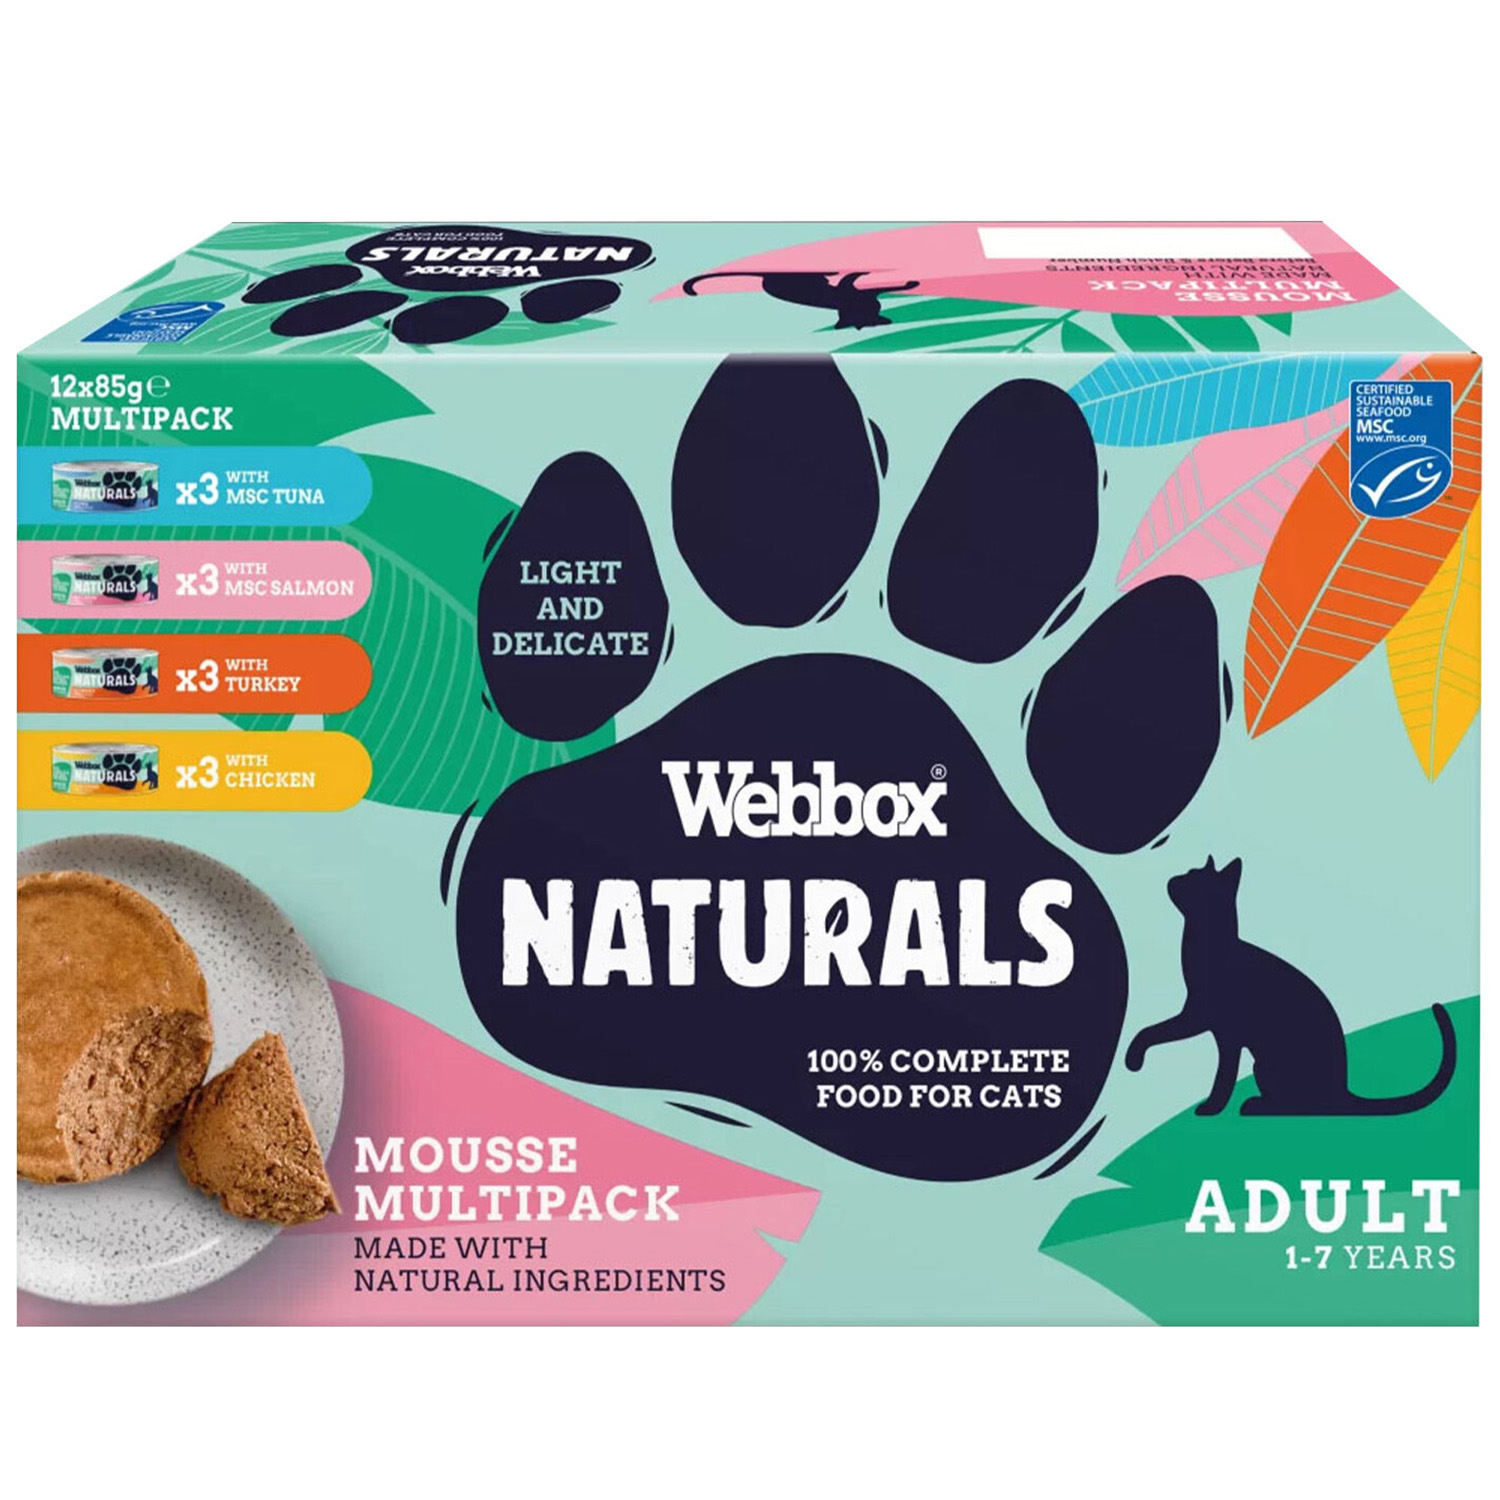 Webbox Naturals Adult Cat Food Mousse 12 Pack Image